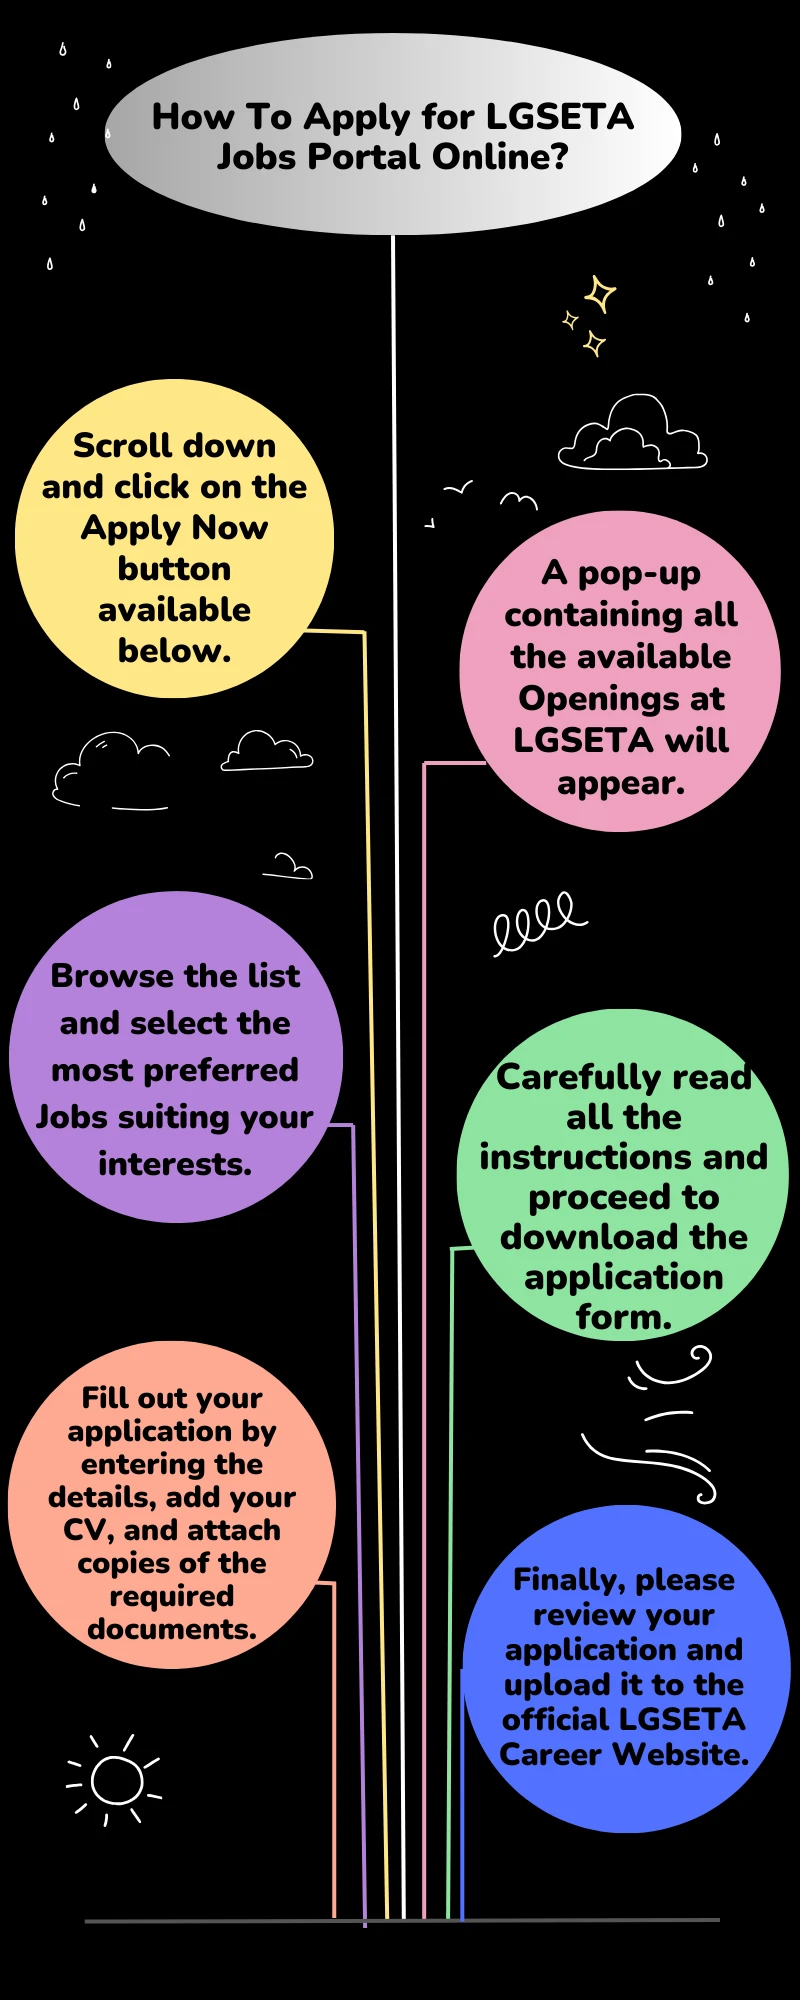 How To Apply for LGSETA Jobs Portal Online?